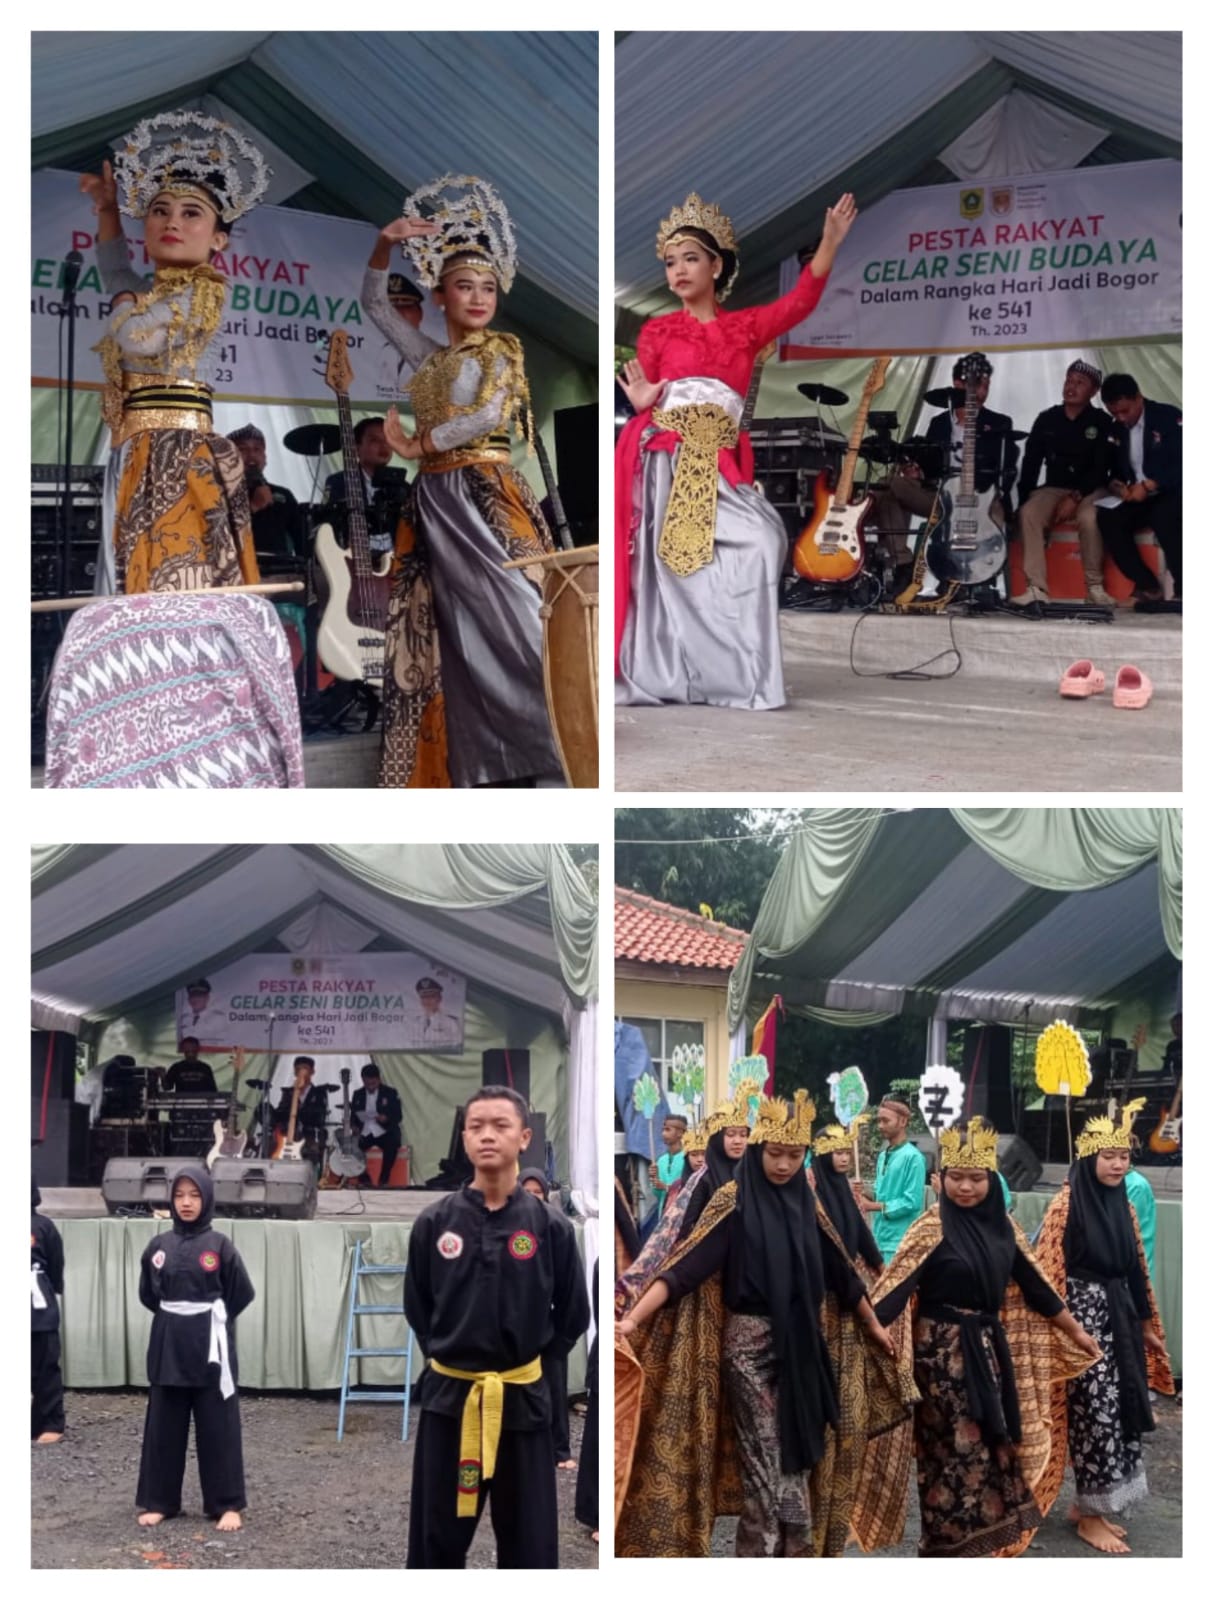 Kecamatan Tanjungsari Gelar Pesta Rakyat Budaya Seni Tari Jadi Bogor Yang Ke-541